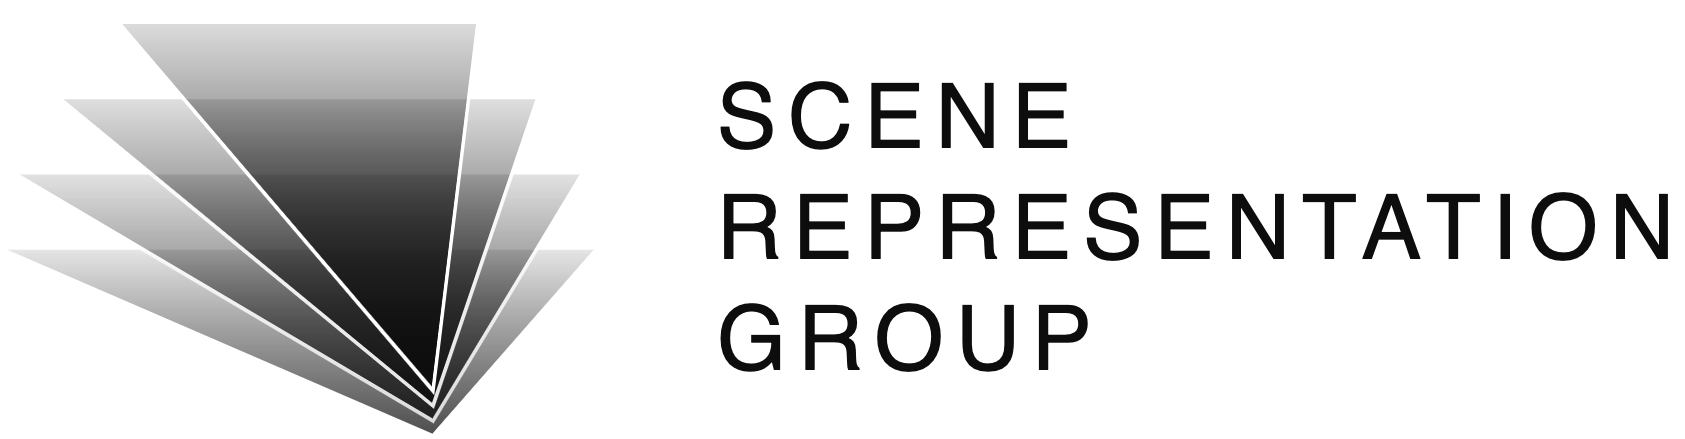 MIT Scene Representation Group